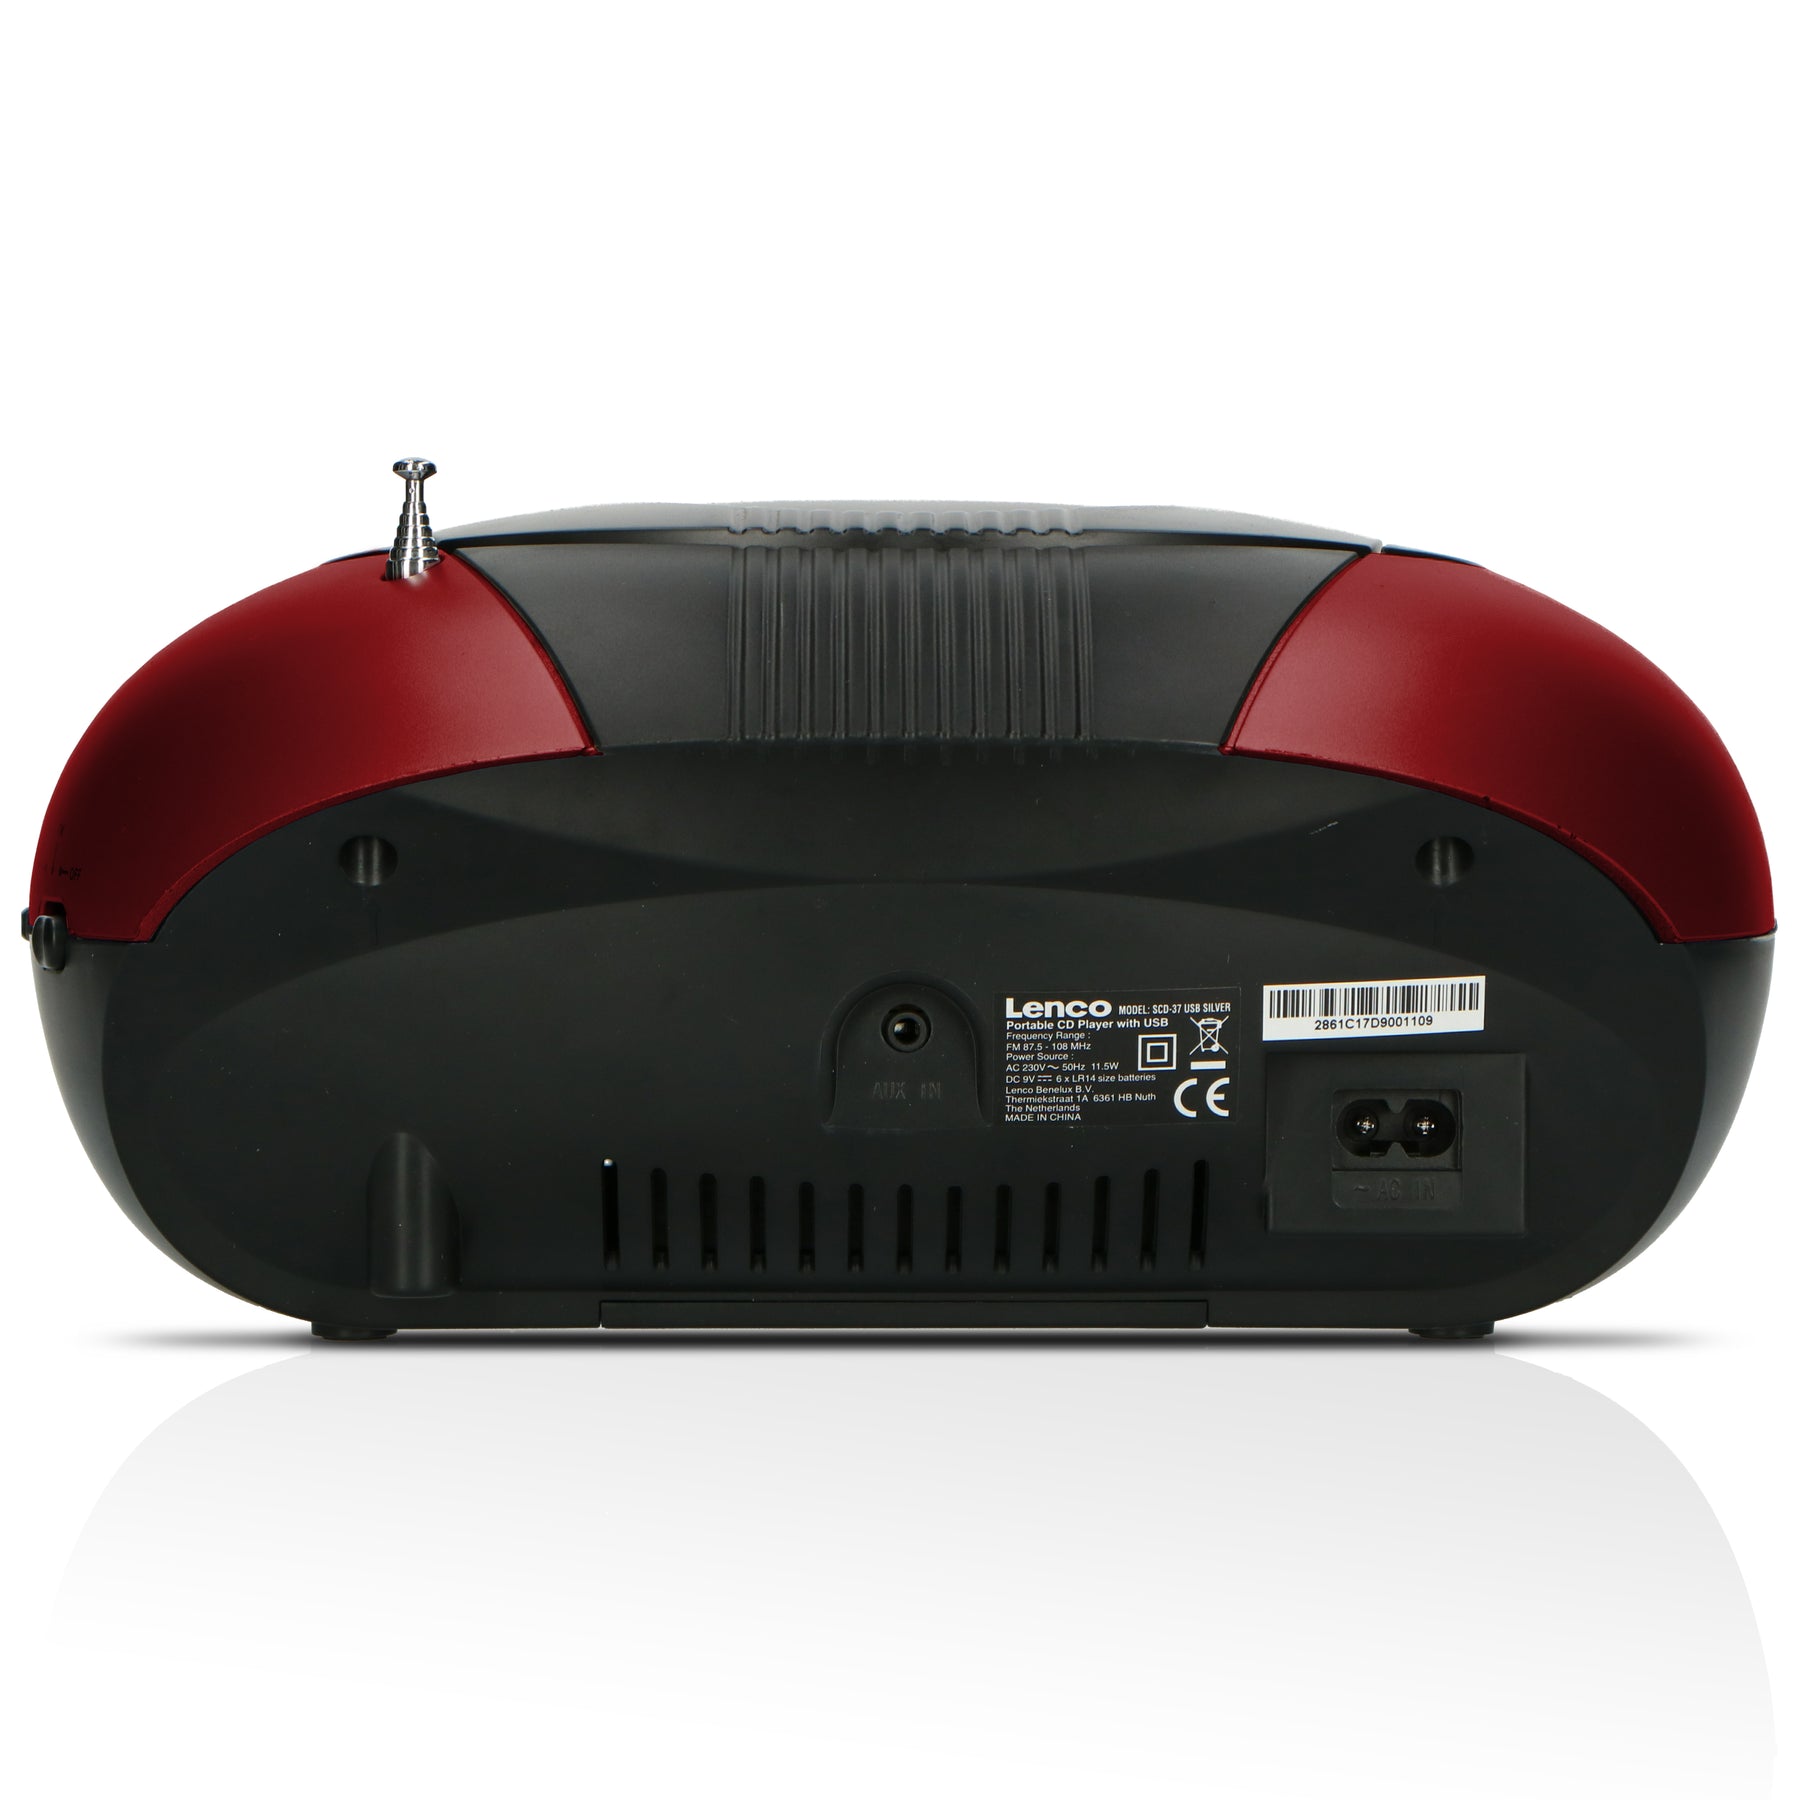 Radio portable fm et lecteur cd/usb lenco rose SCD-37 USB Pink - Conforama